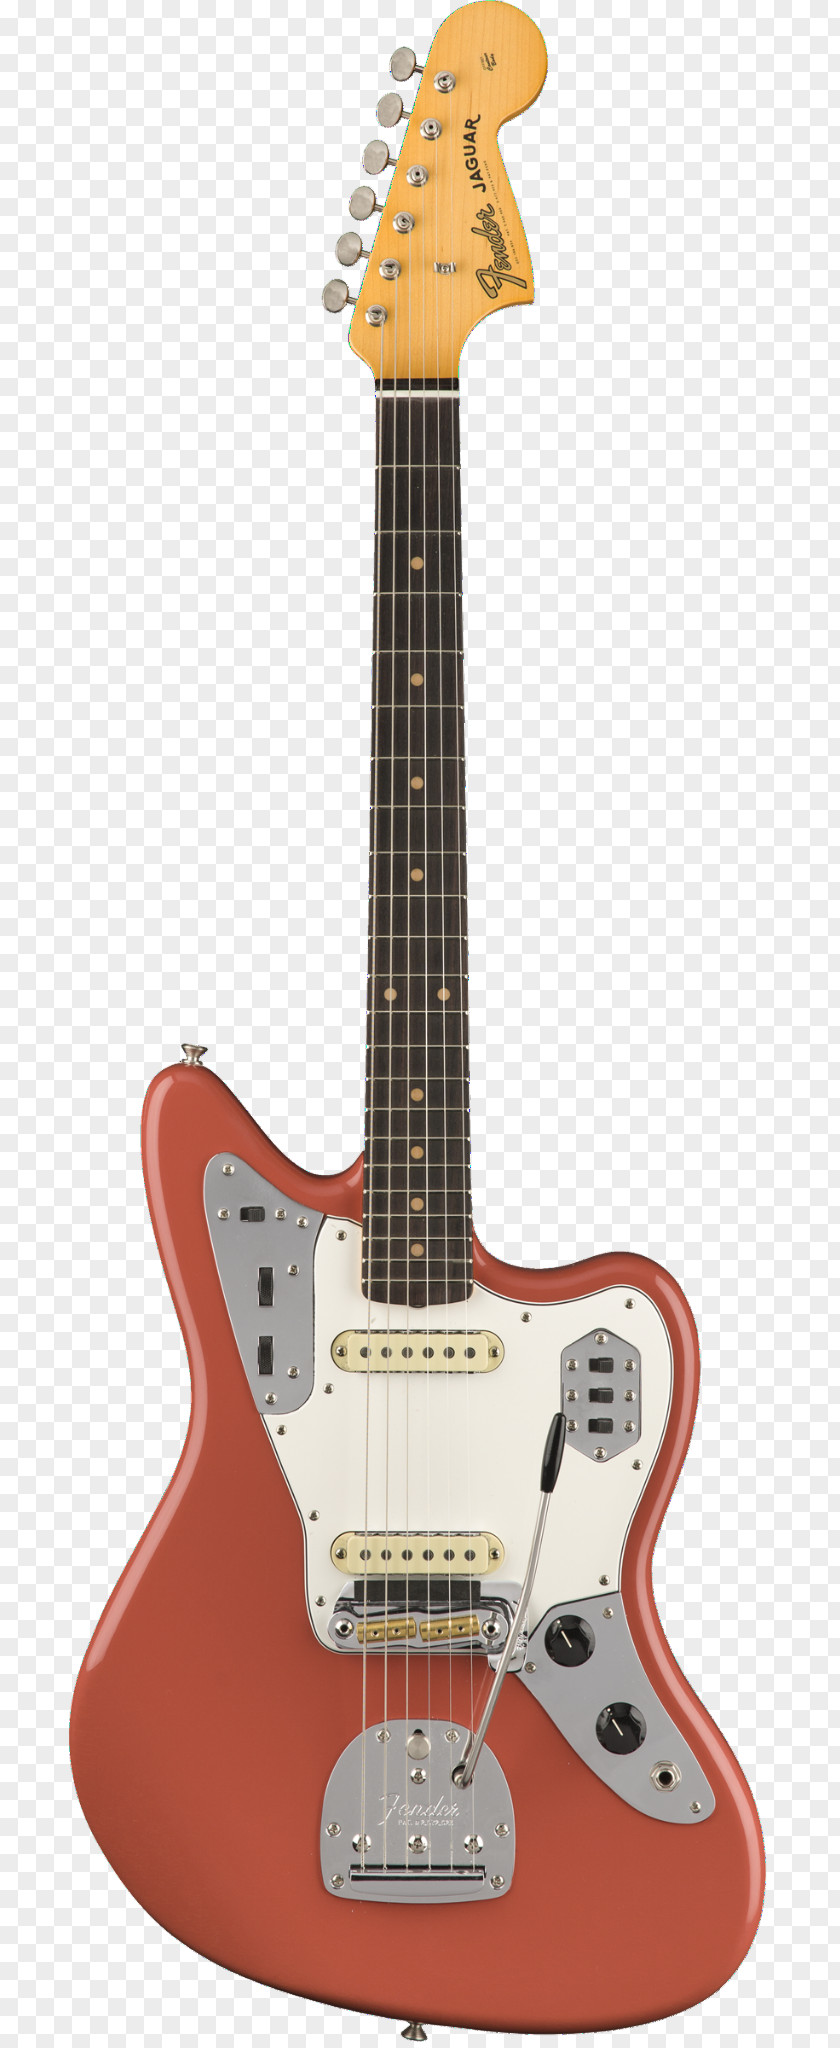 Fender Jaguar Bass Musical Instruments Corporation Jazzmaster Guitar Stratocaster PNG